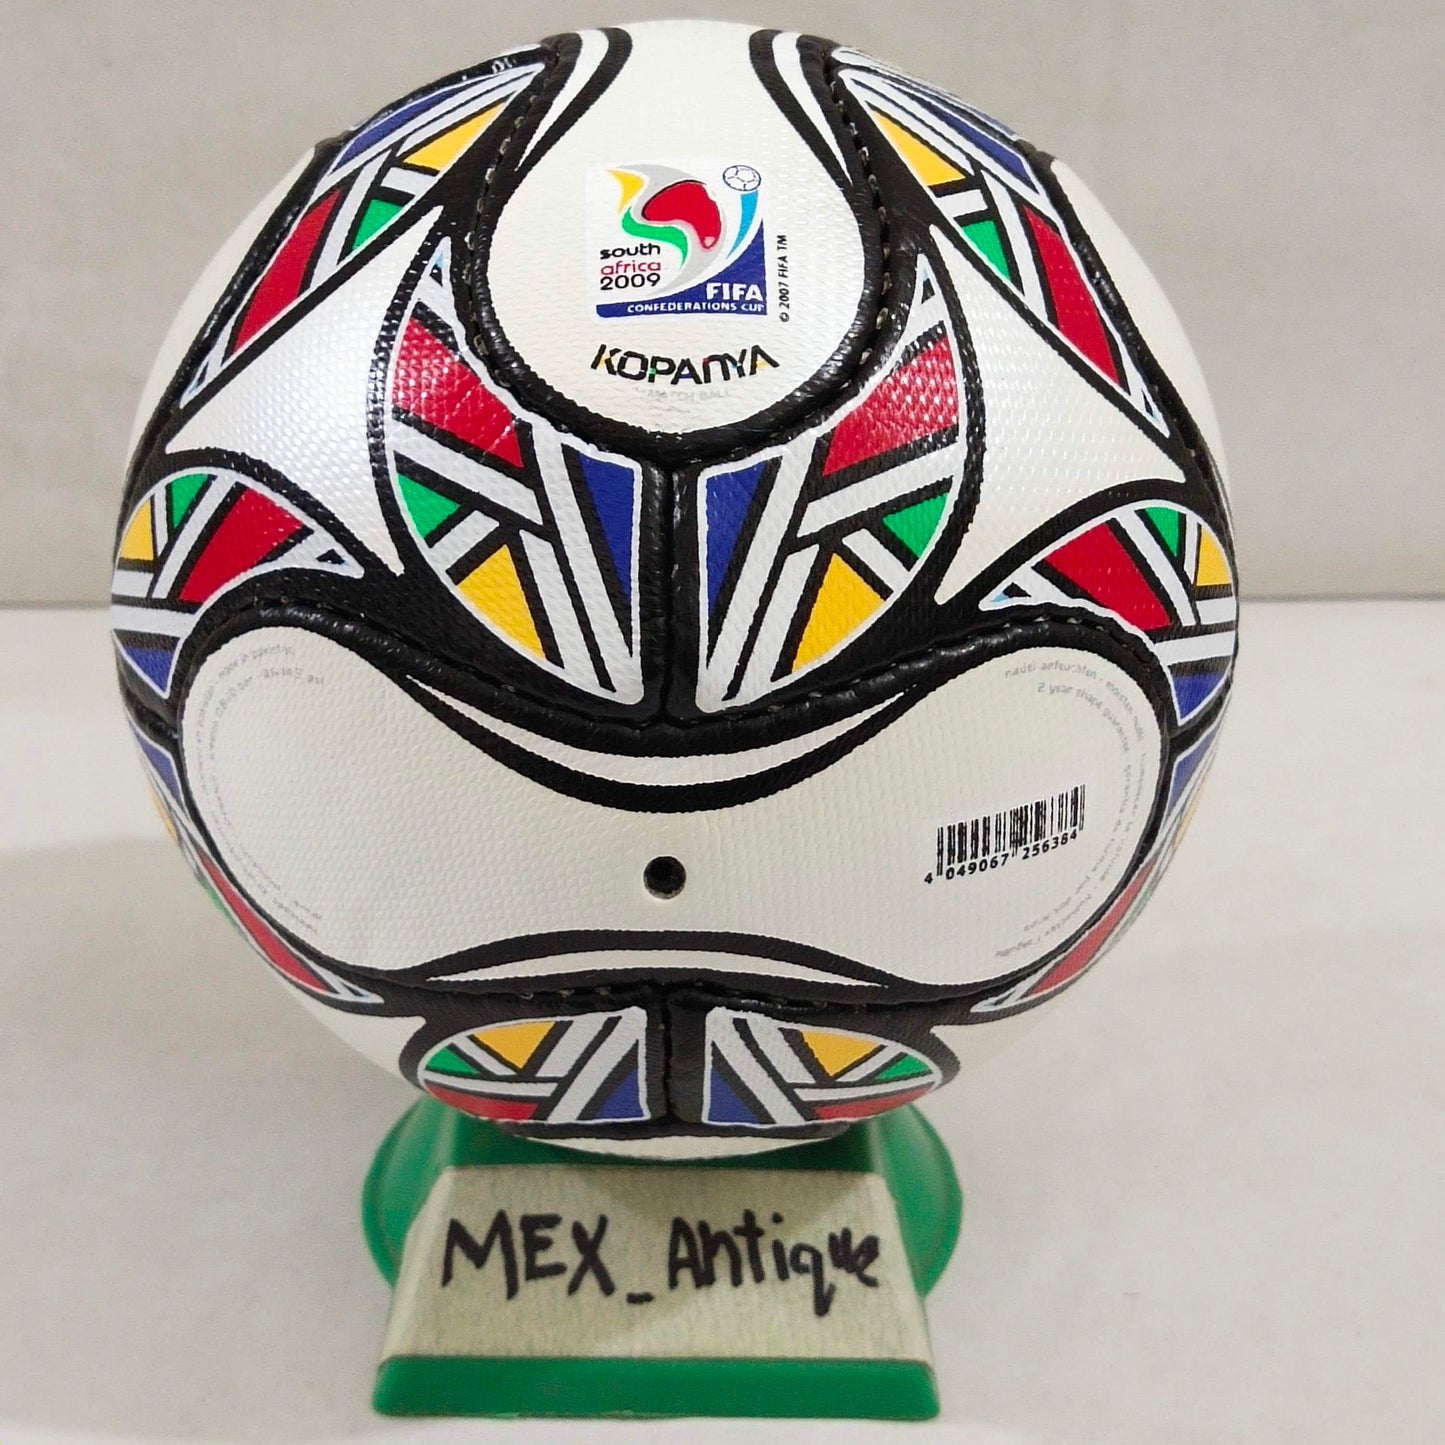 Adidas Kopanya Mini | FIFA Confederations Cup 2009 | Mini Ball 03